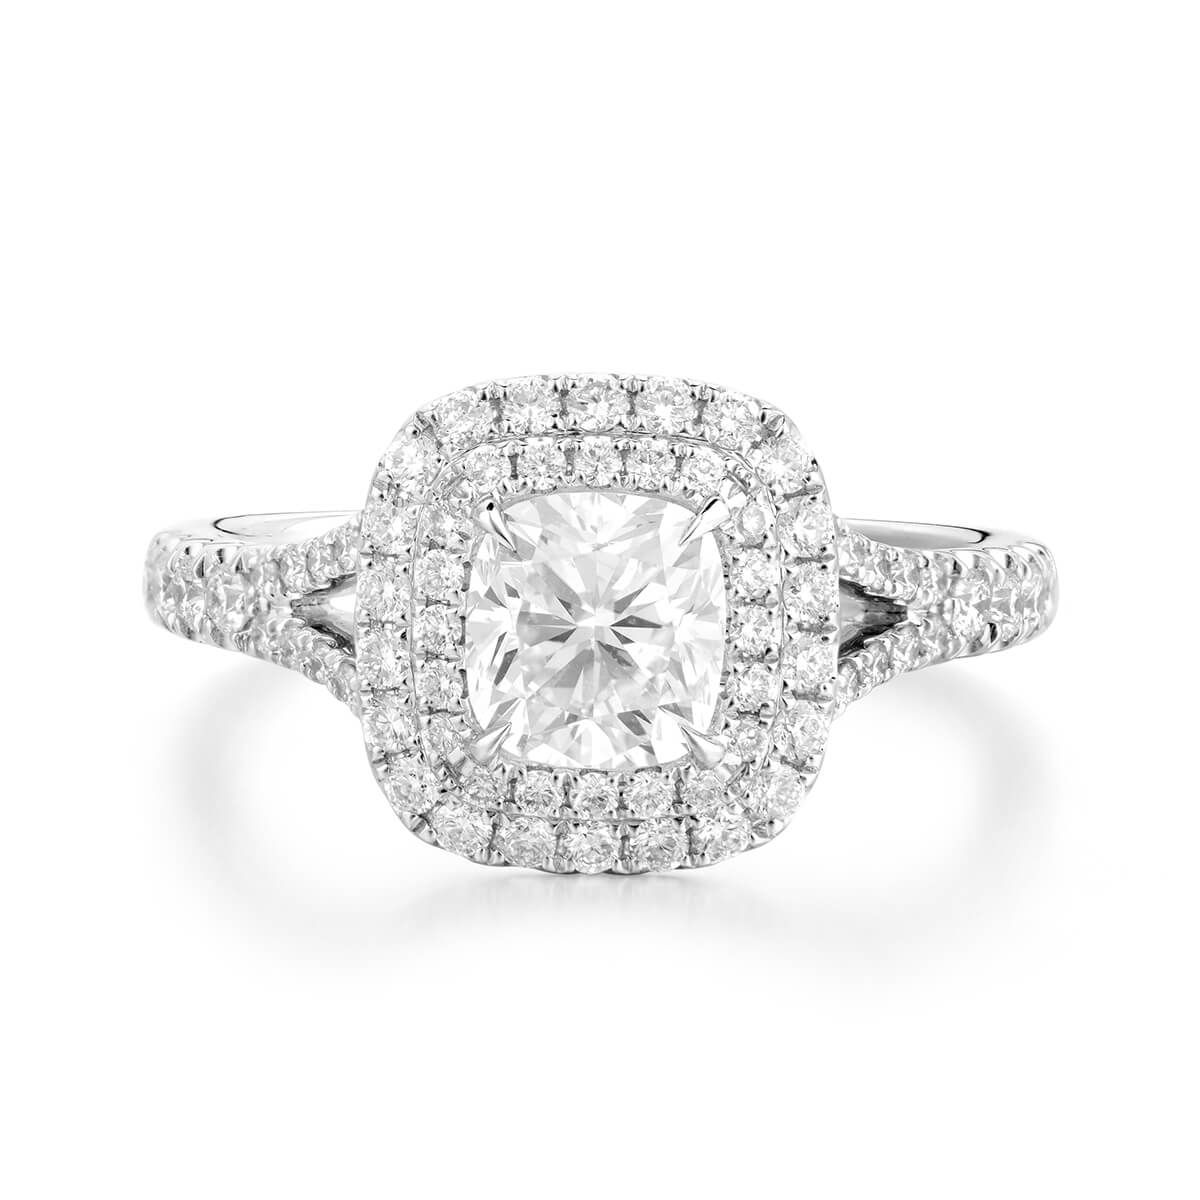  White Diamond Ring, 1.01 Ct. (1.49 Ct. TW), Cushion shape, GIA Certified, 2256476045